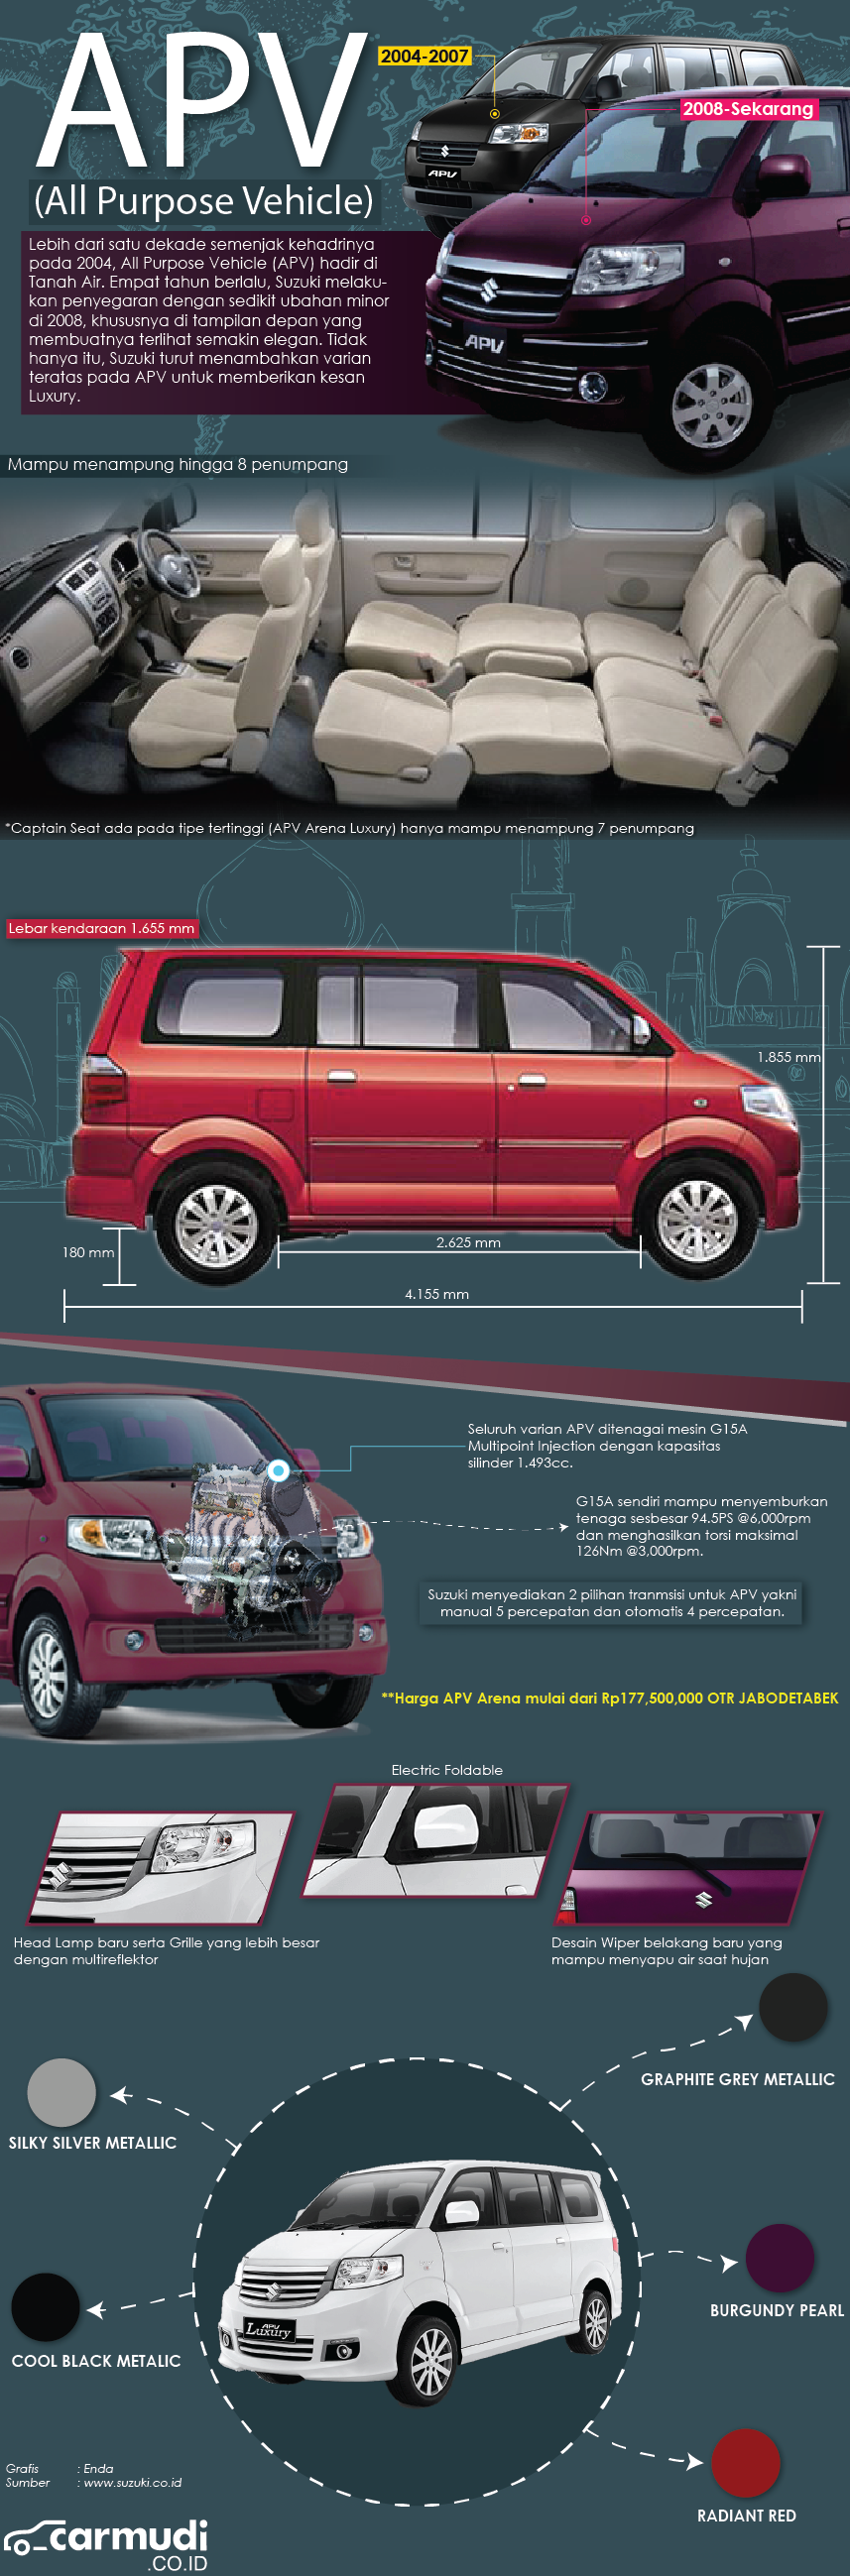 Suzuki Apv 2018 infographic